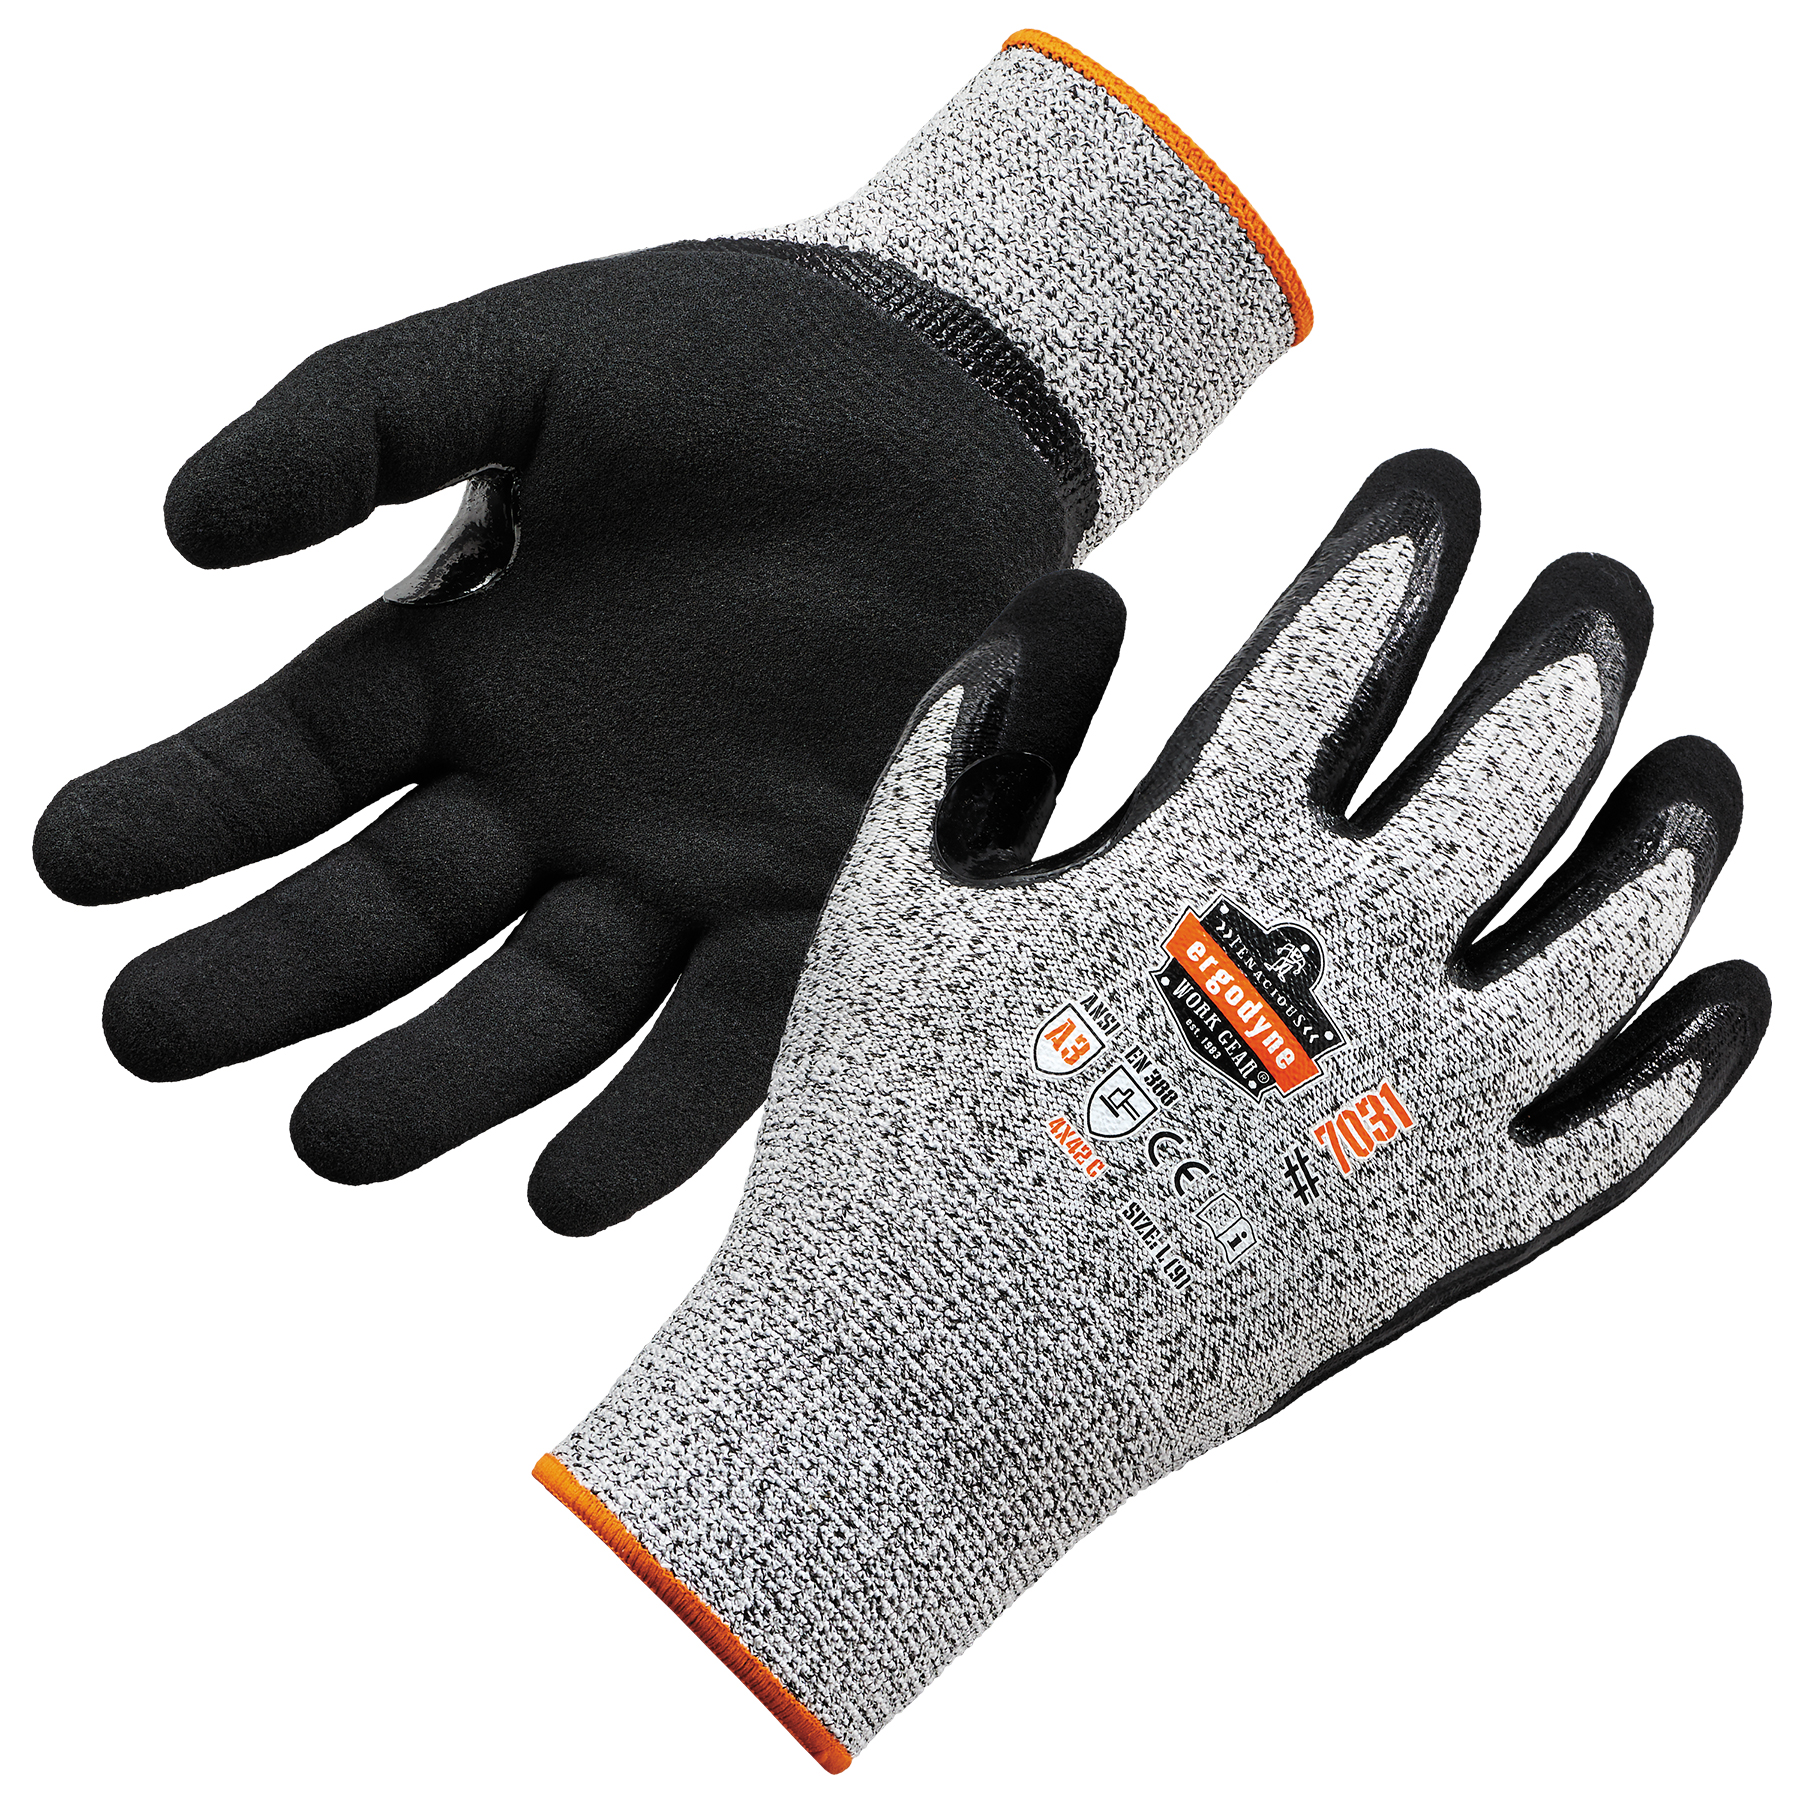 https://www.ergodyne.com/sites/default/files/product-images/17982-7031-nitrile-coated-cut-resistant-gloves-pair_1.jpg